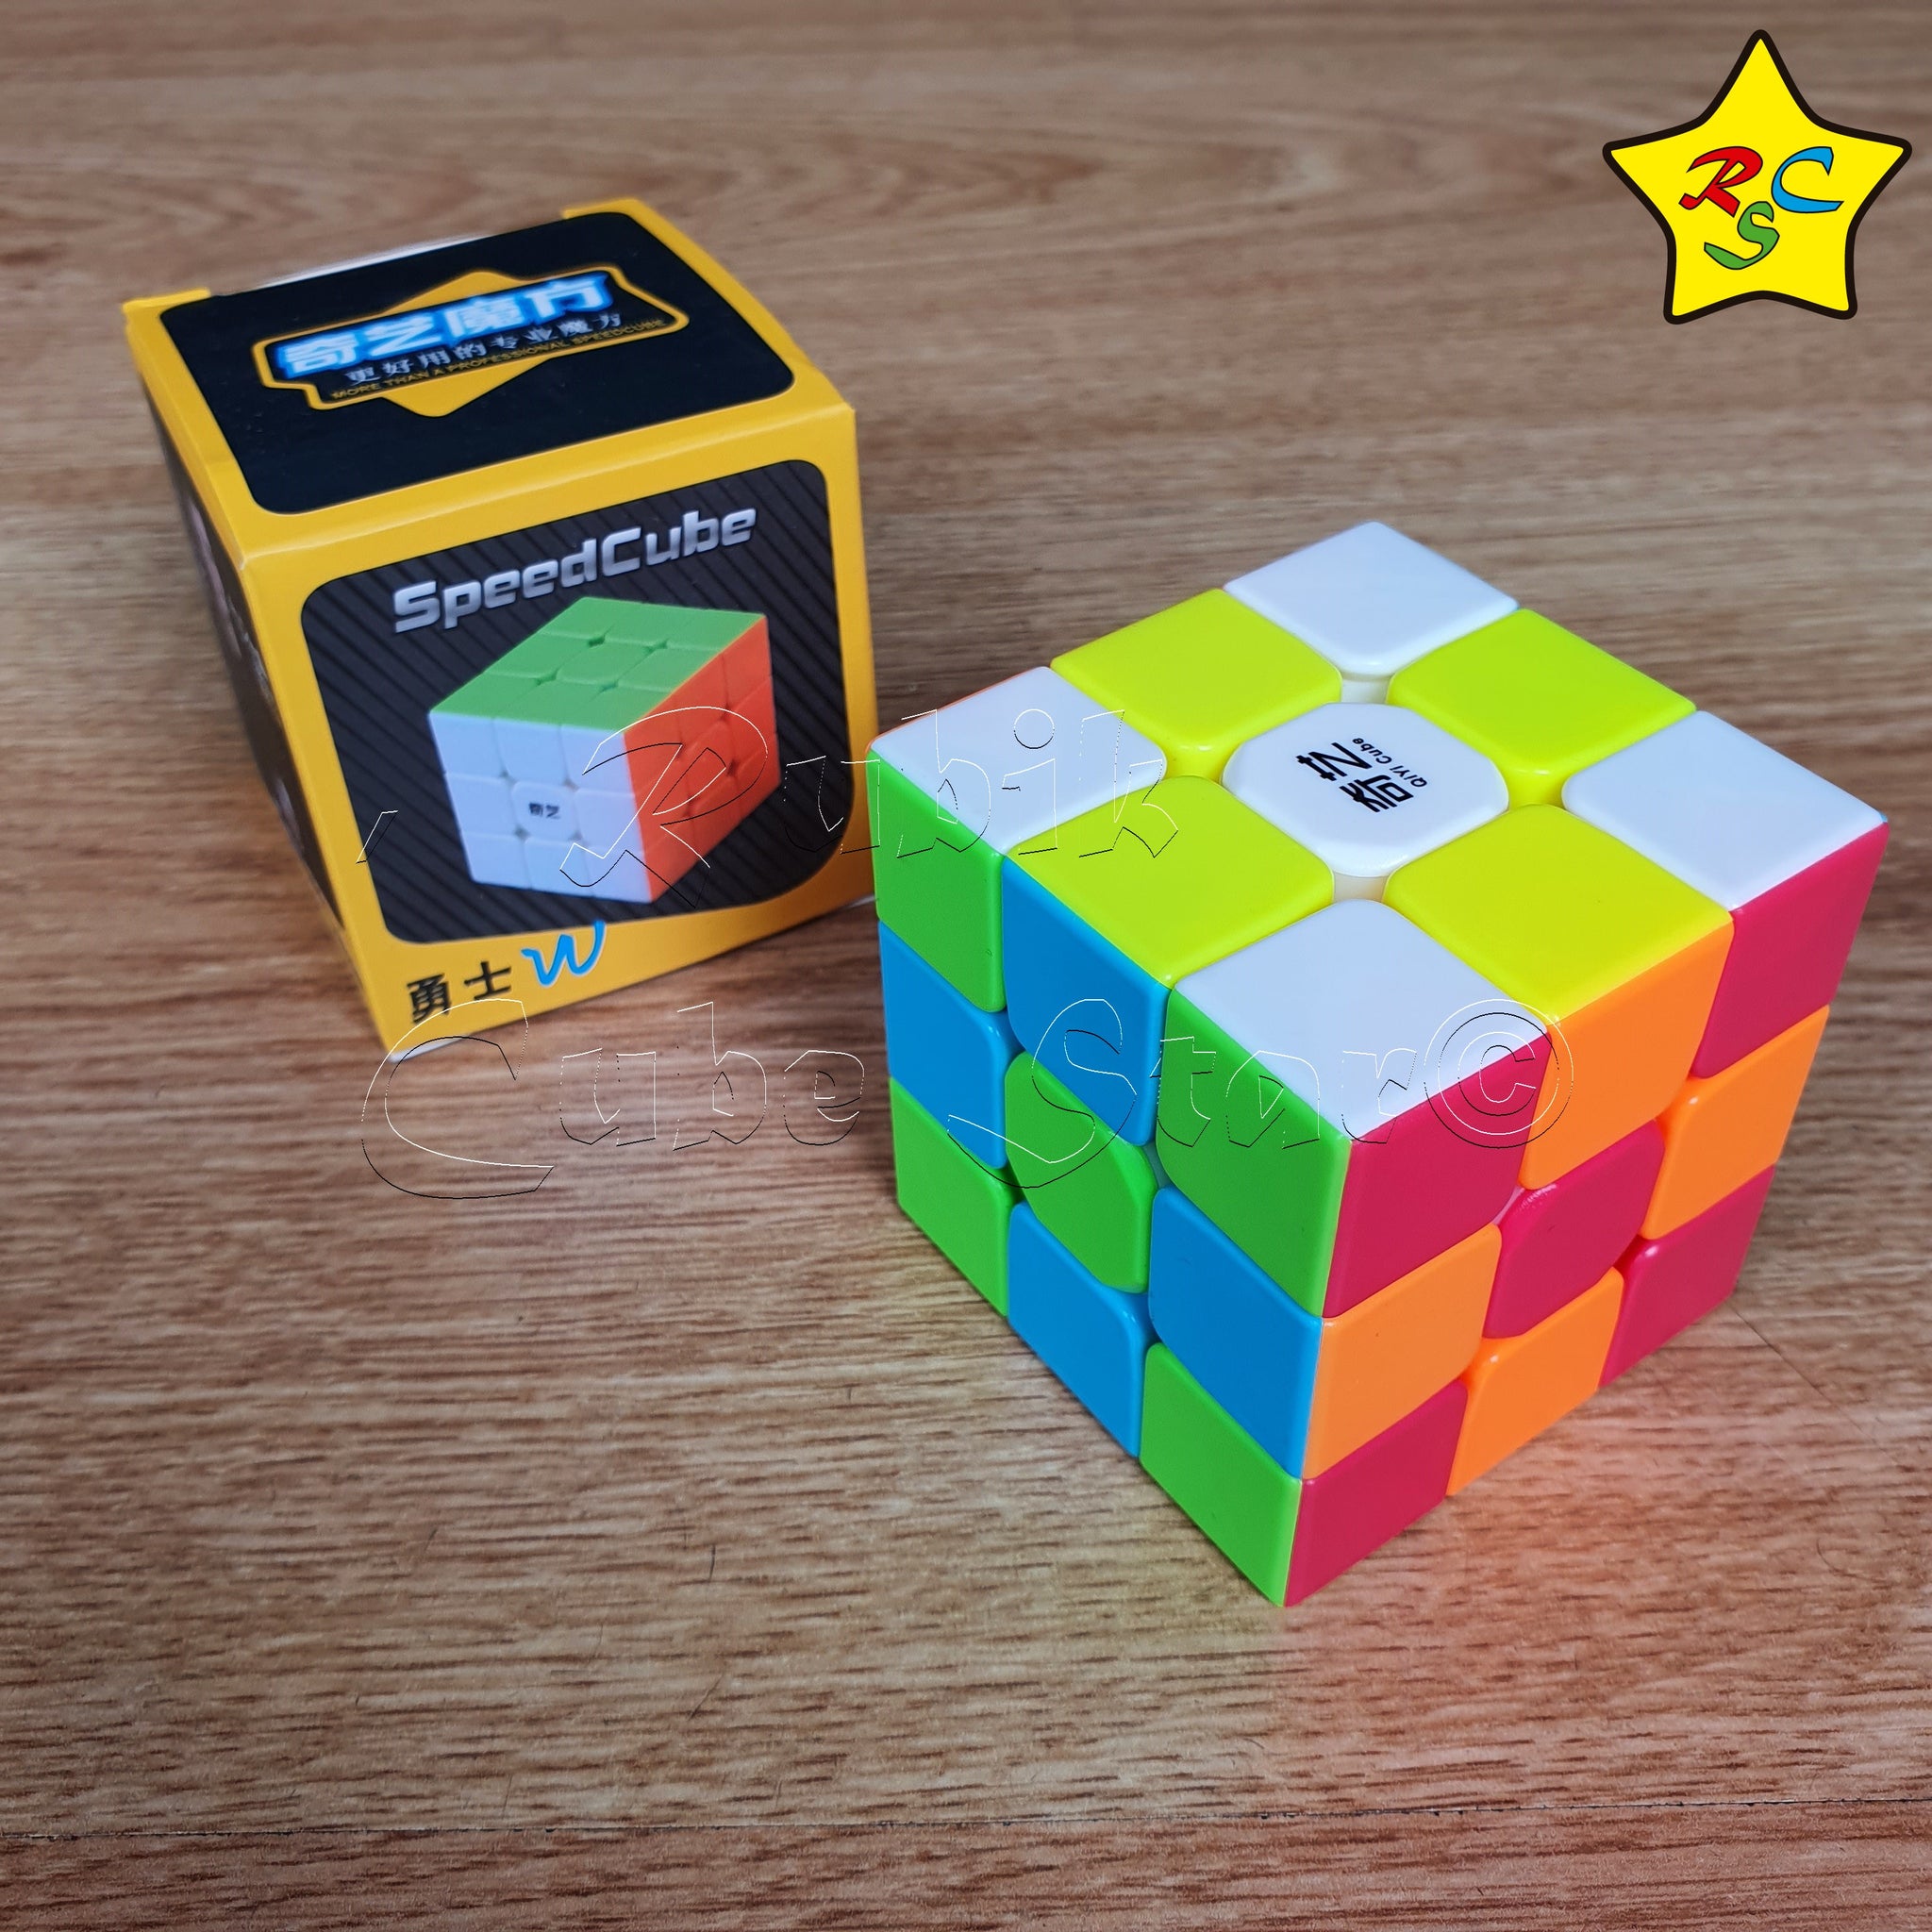 Cubo Rubik Warrior 3x3 Qiyi Warrior W Speedcube Original – Rubik Cube Star